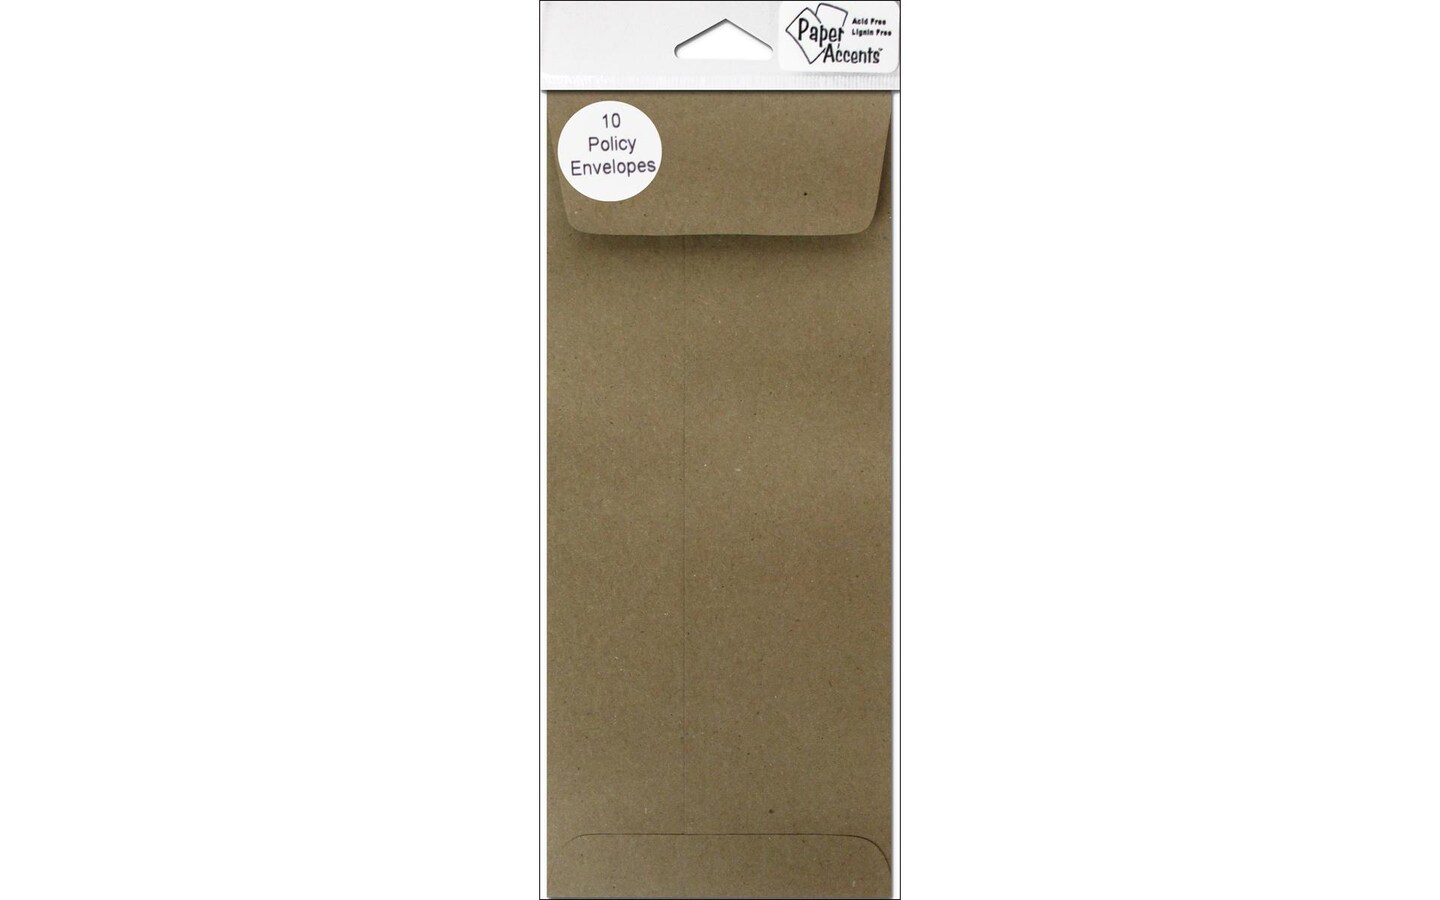 Envelope #10 Policy 10pc Brown Bag